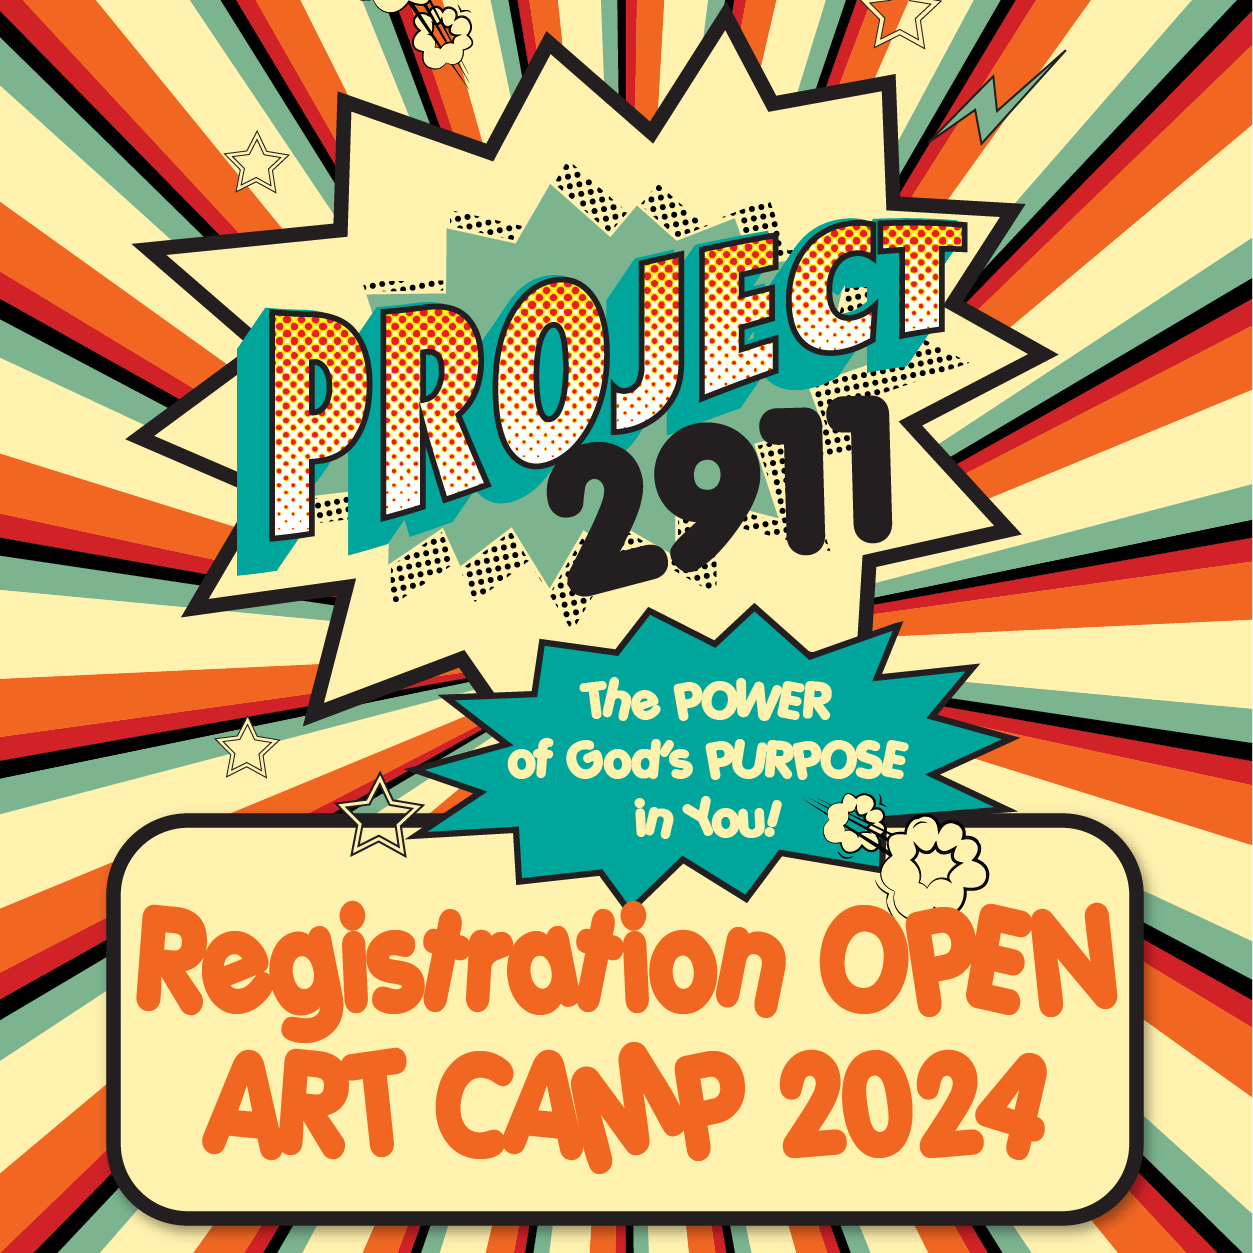 Registration OPEN ~ ART CAMP 2024!